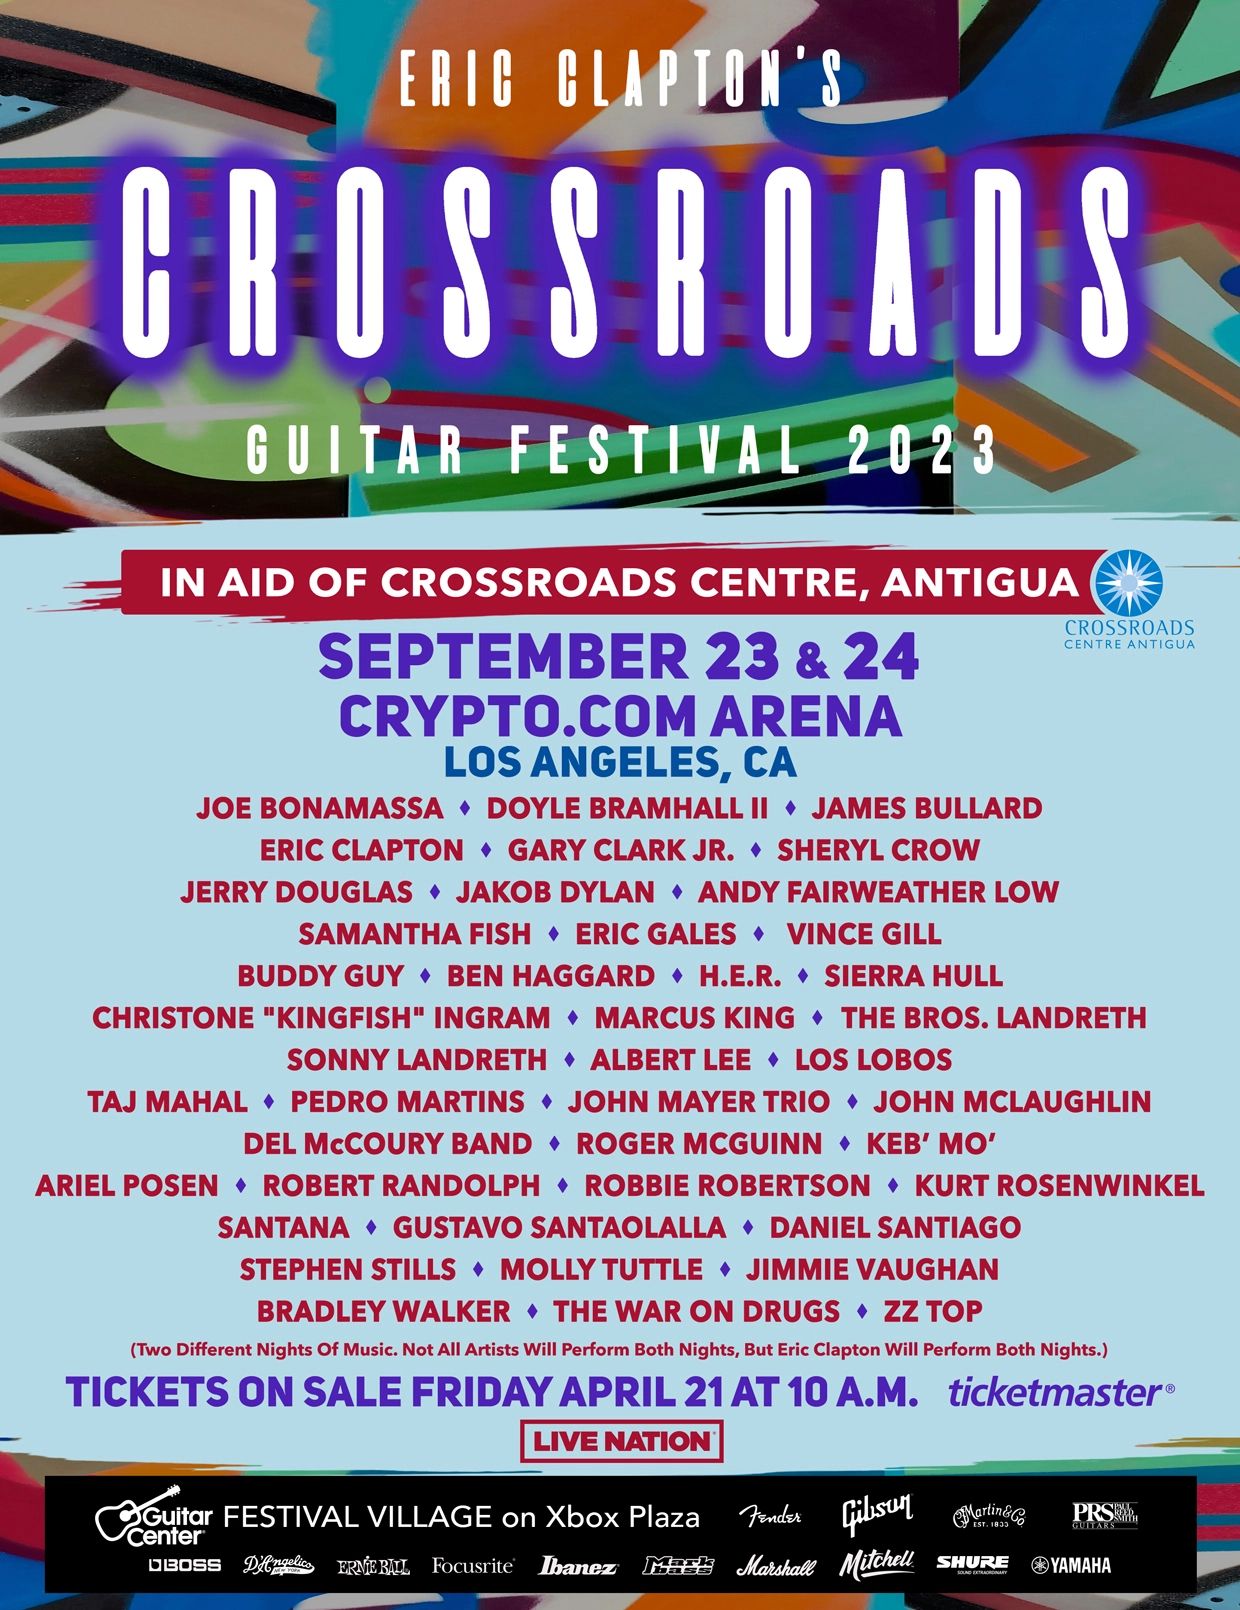 Vince Joins 2023 Eric Clapton's Crossroads Guitar Festival Lineup